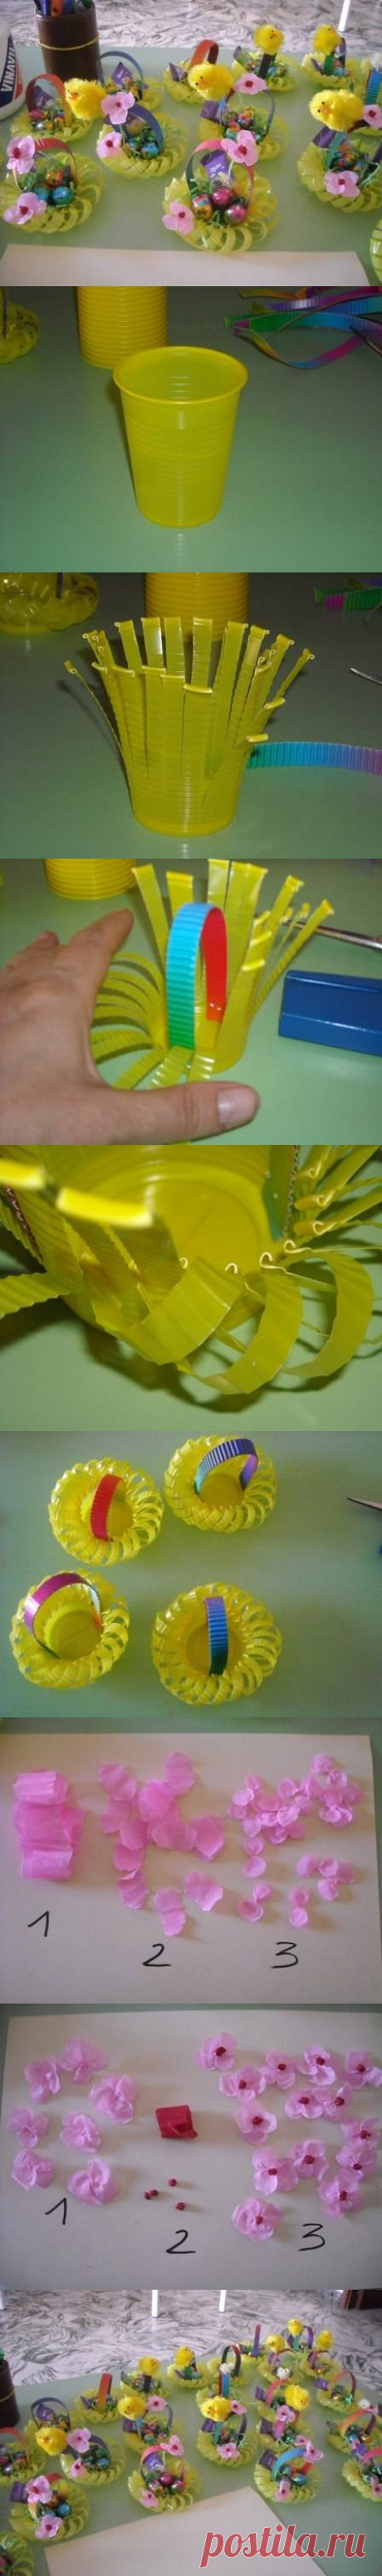 DIY Plastic Cup Flower Basket DIY Projects | UsefulDIY.com